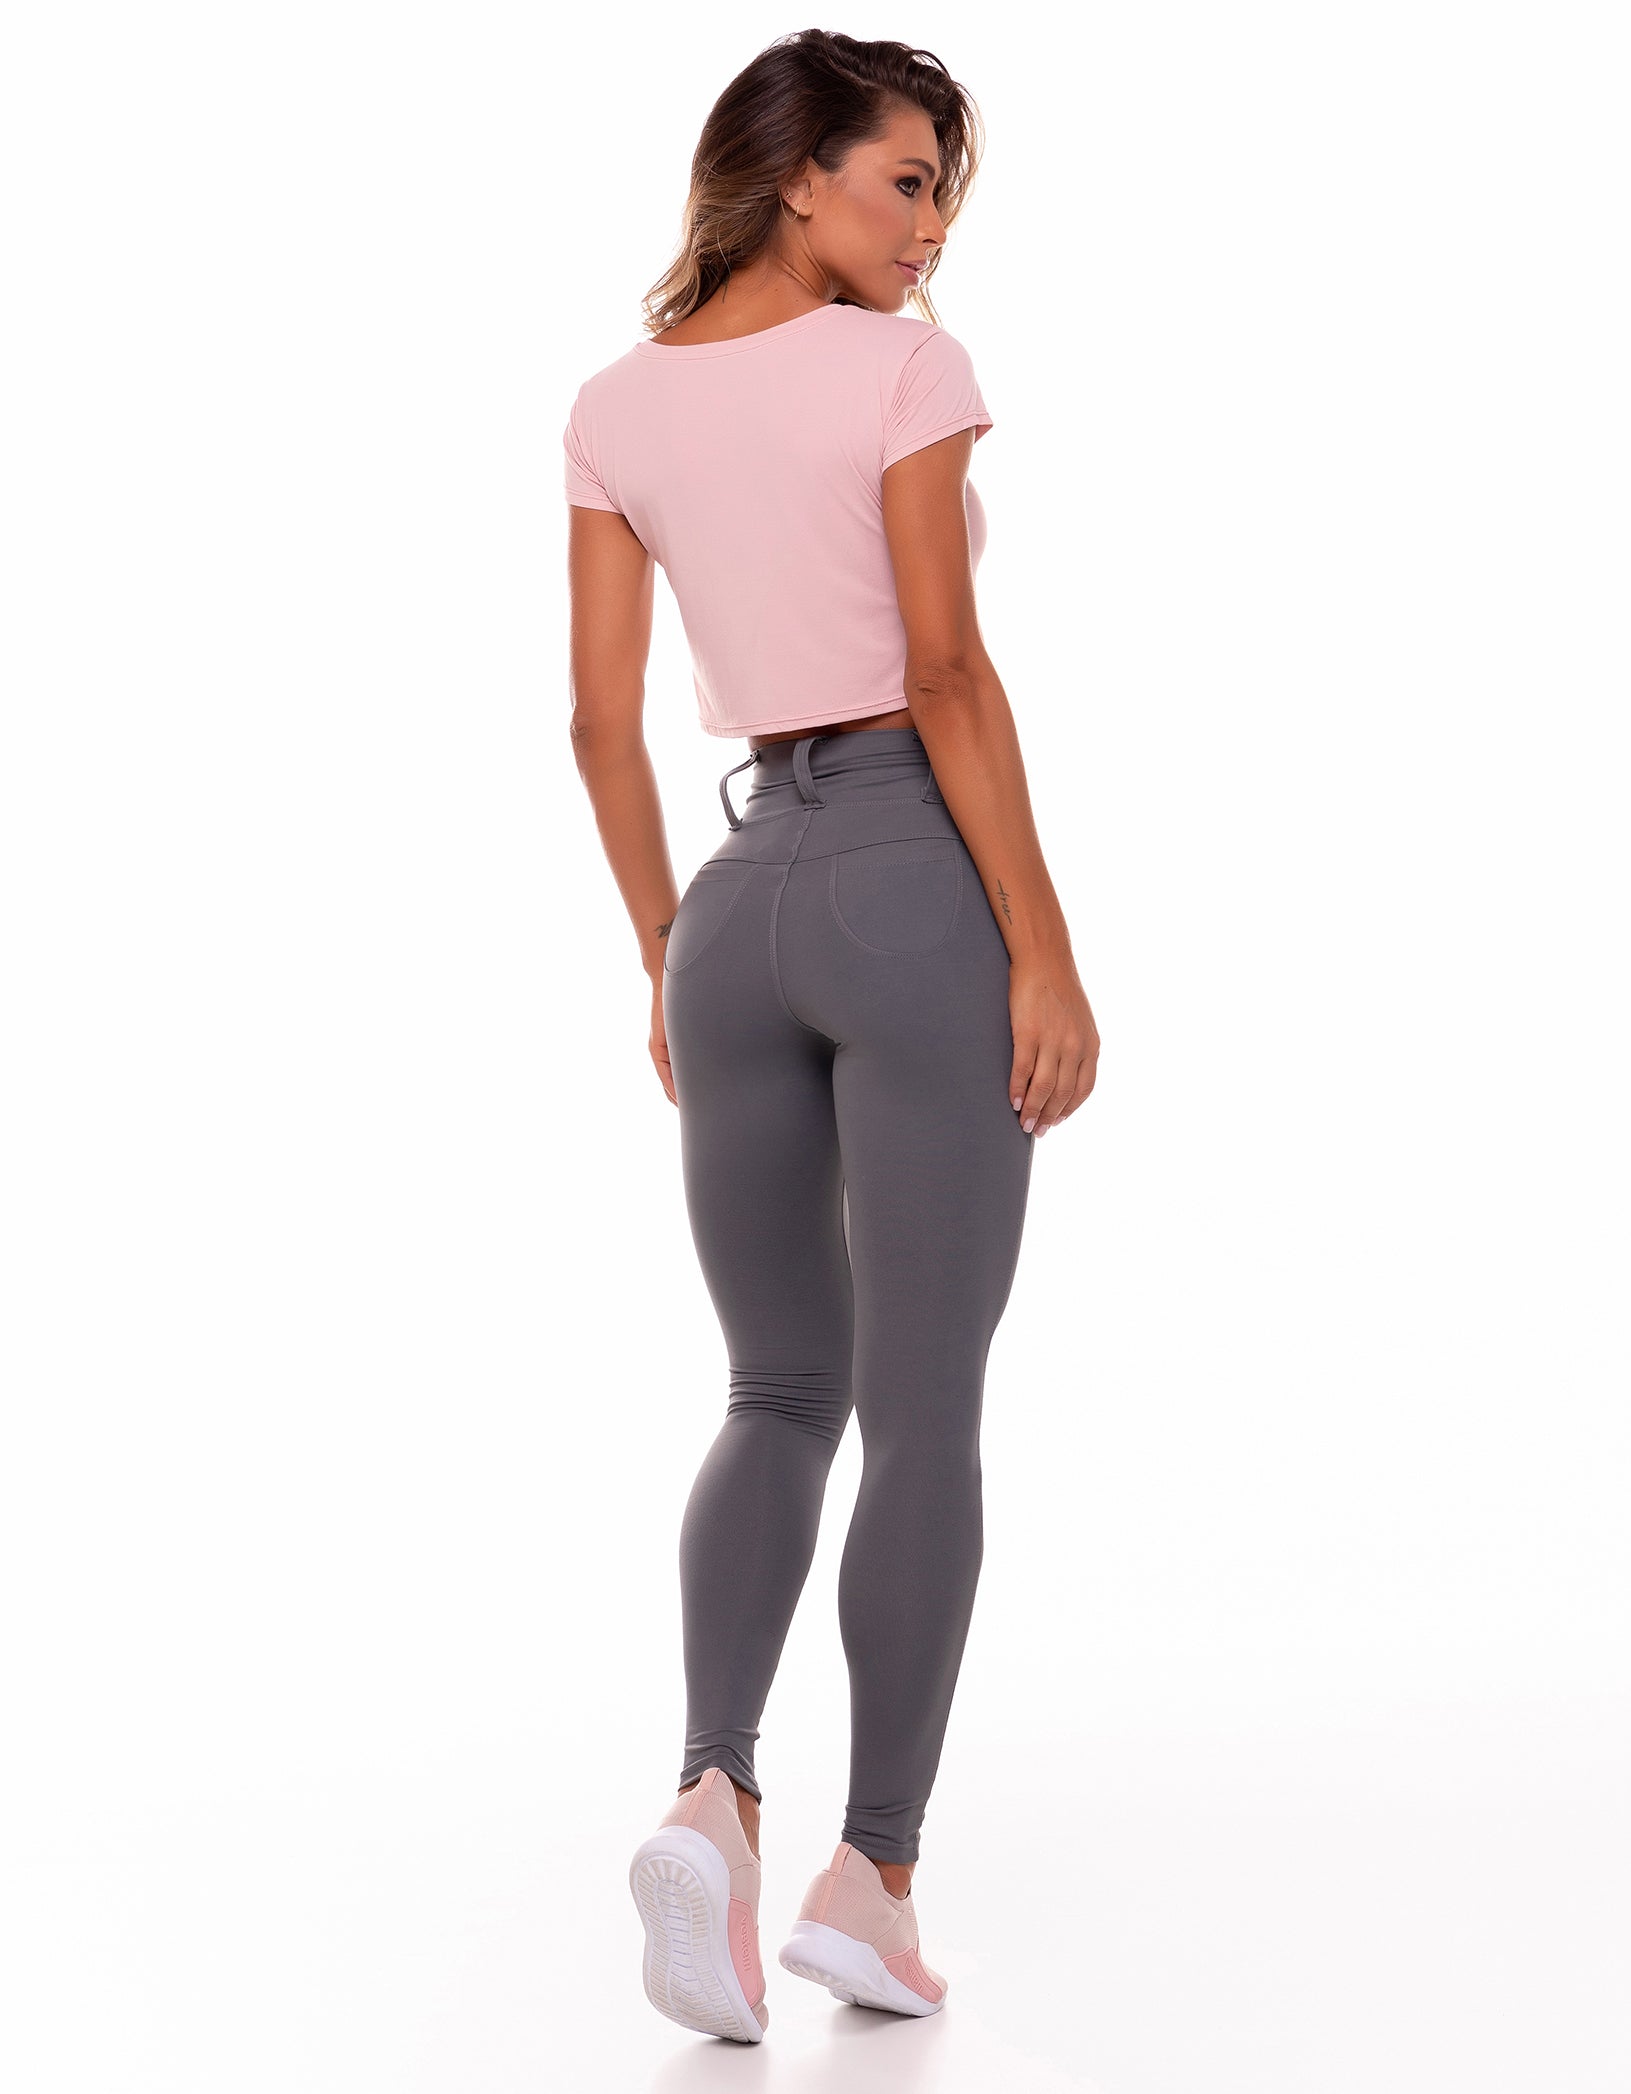 Vestem - Shirt Dry Fit Short Sleeve Chance pink Romance - BMC518.C0243